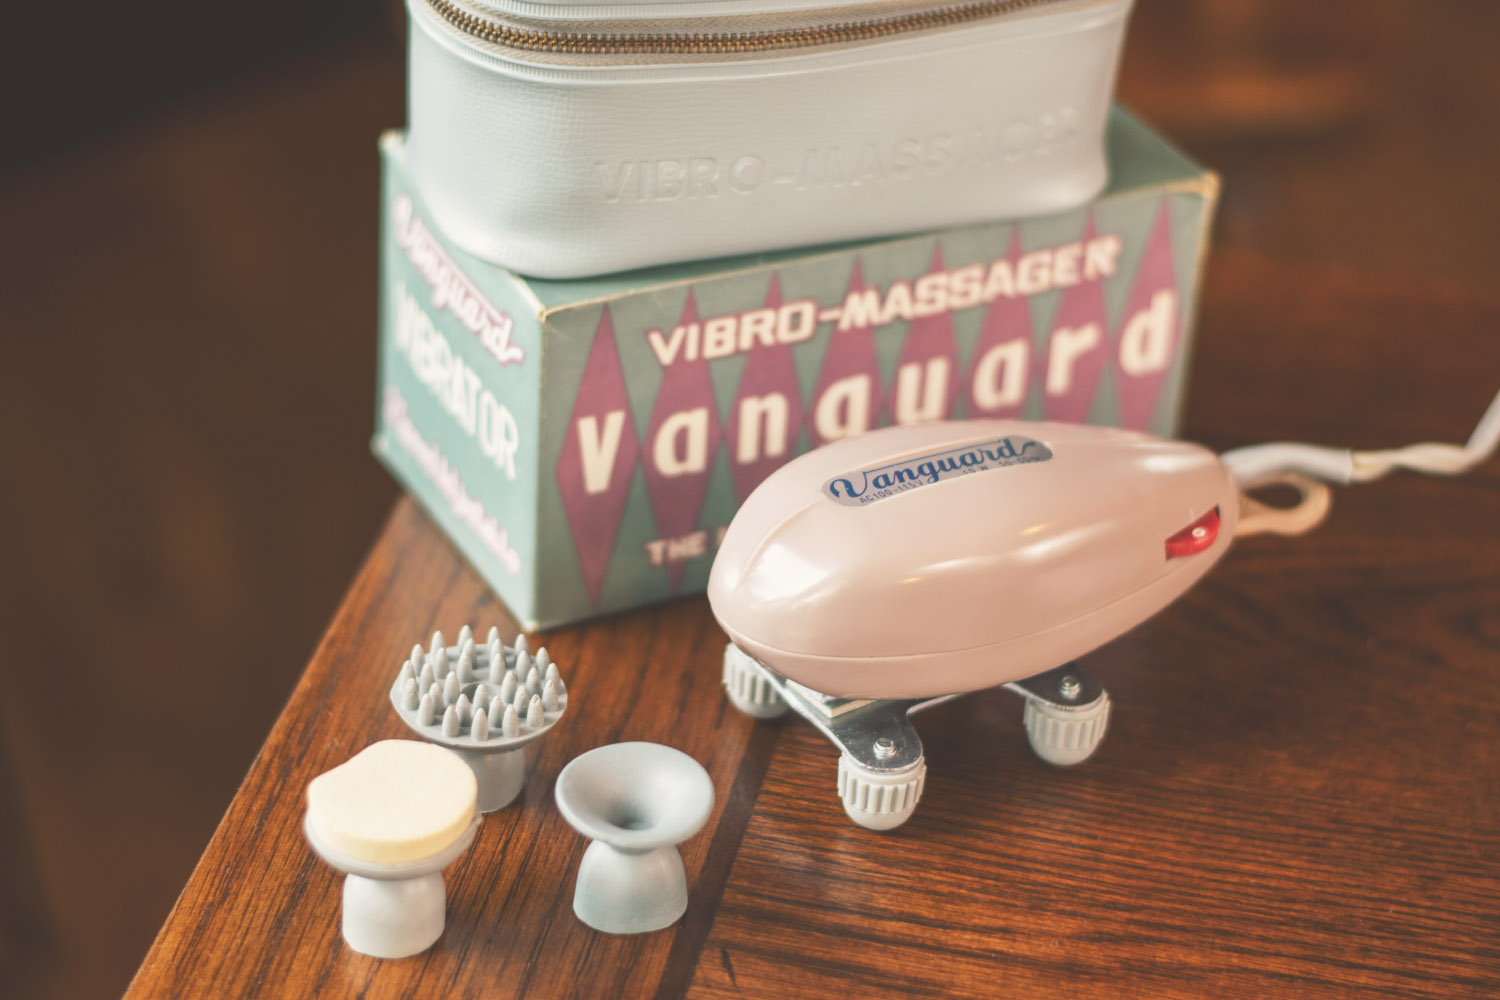 Vanguard Vibro-Massager circa 1950s. Behold that amazing zipper case!